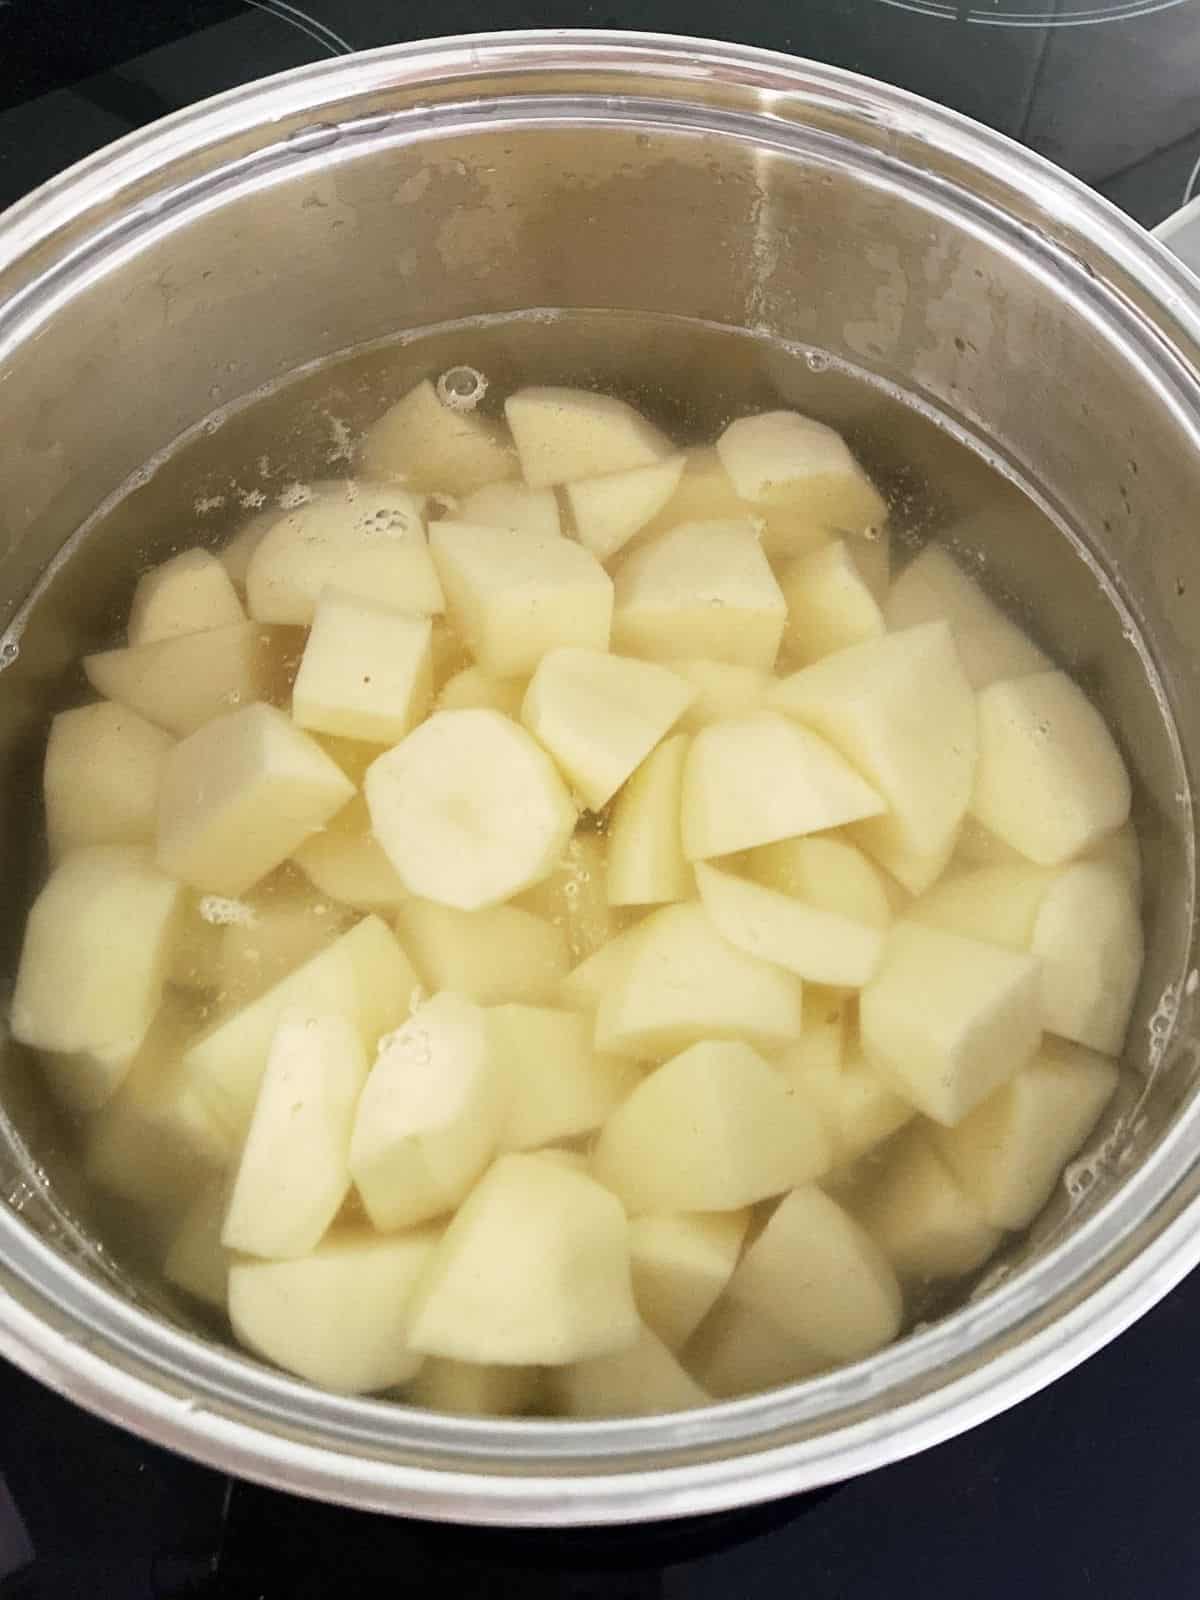 potatoes in a saucepan ready to mash